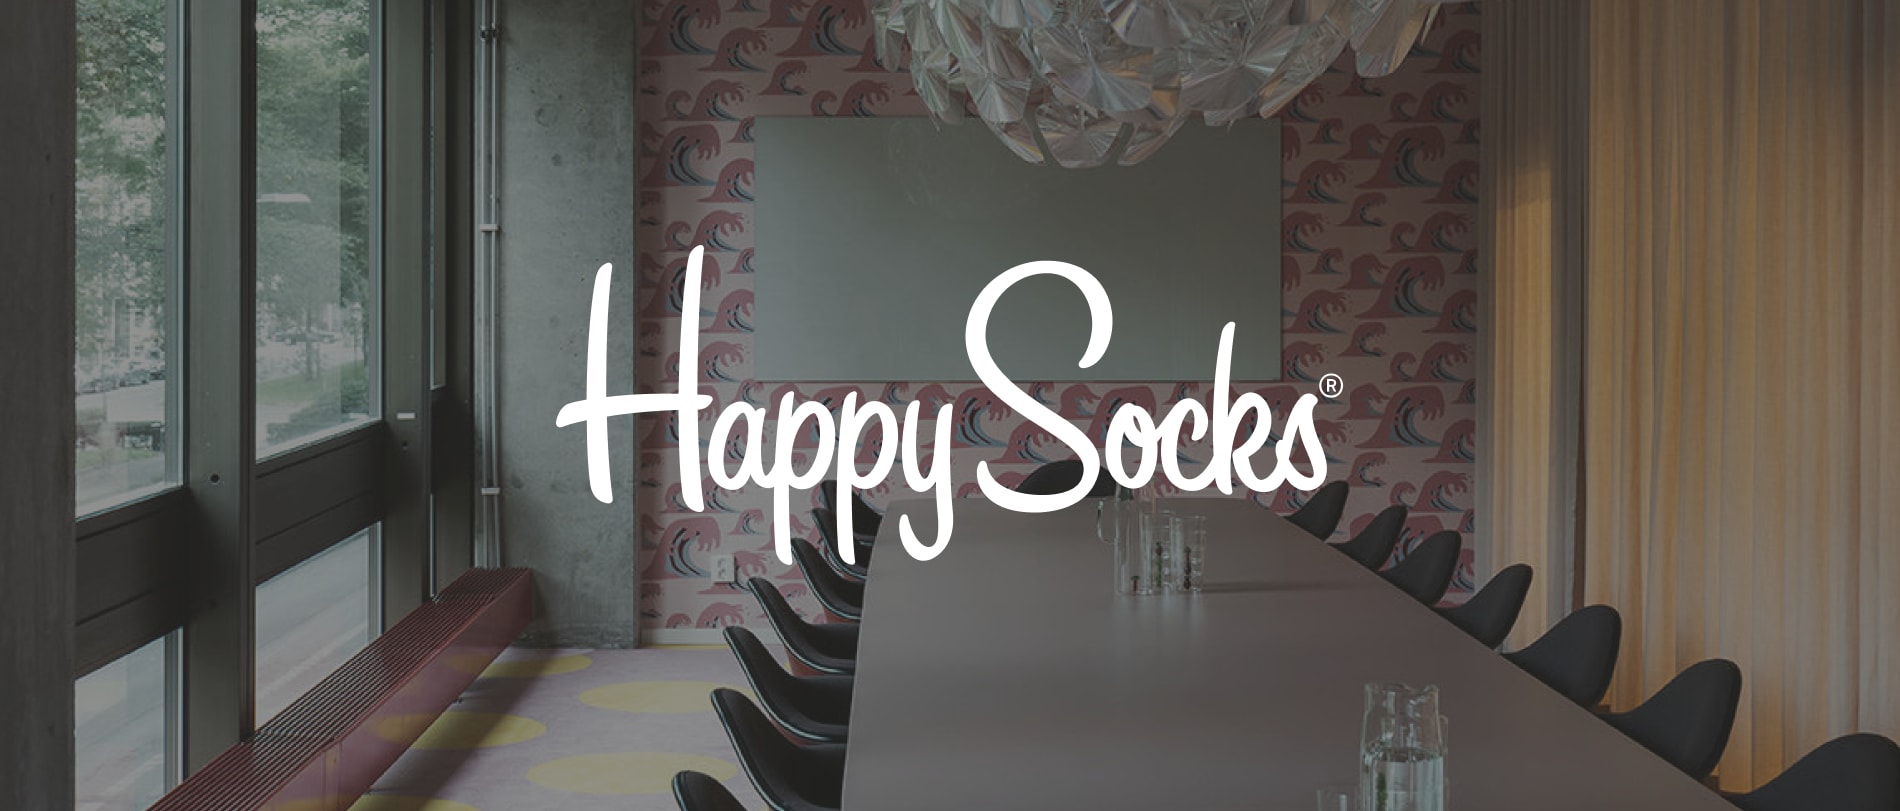 Happy Socks case study lobby image